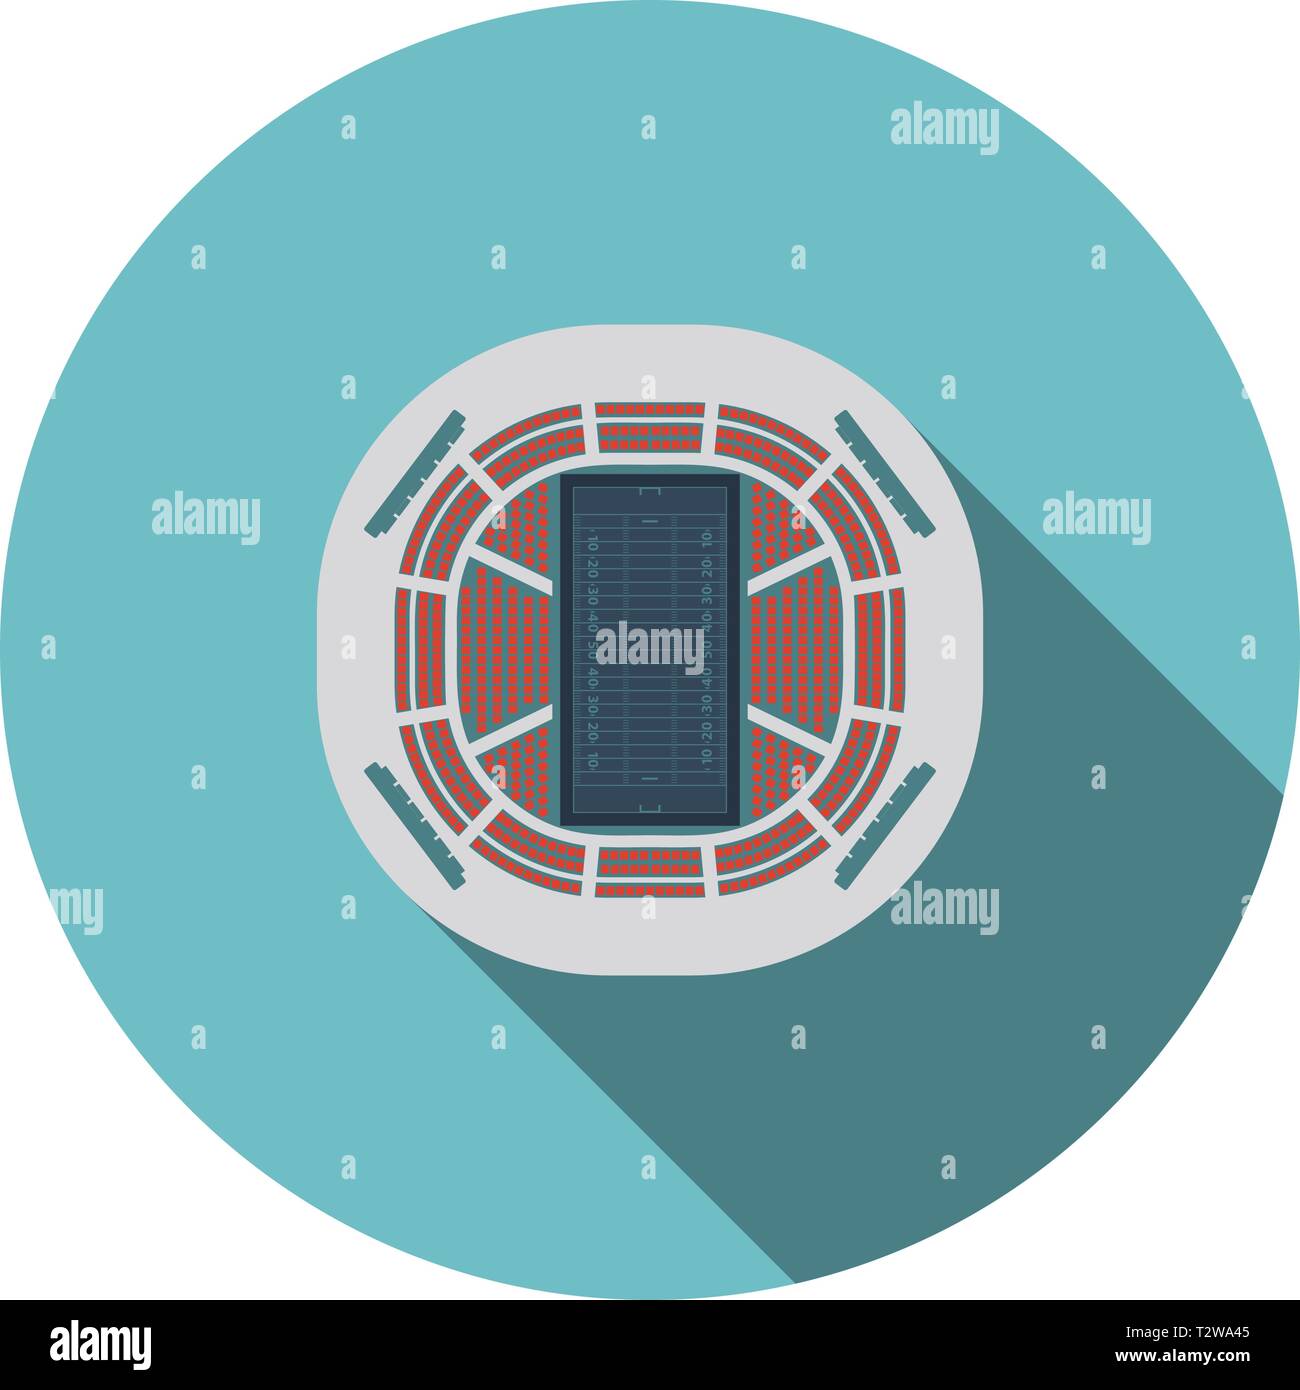 American football stadium bird's-eye view icon. Flat color design. Vector illustration. Stock Vector